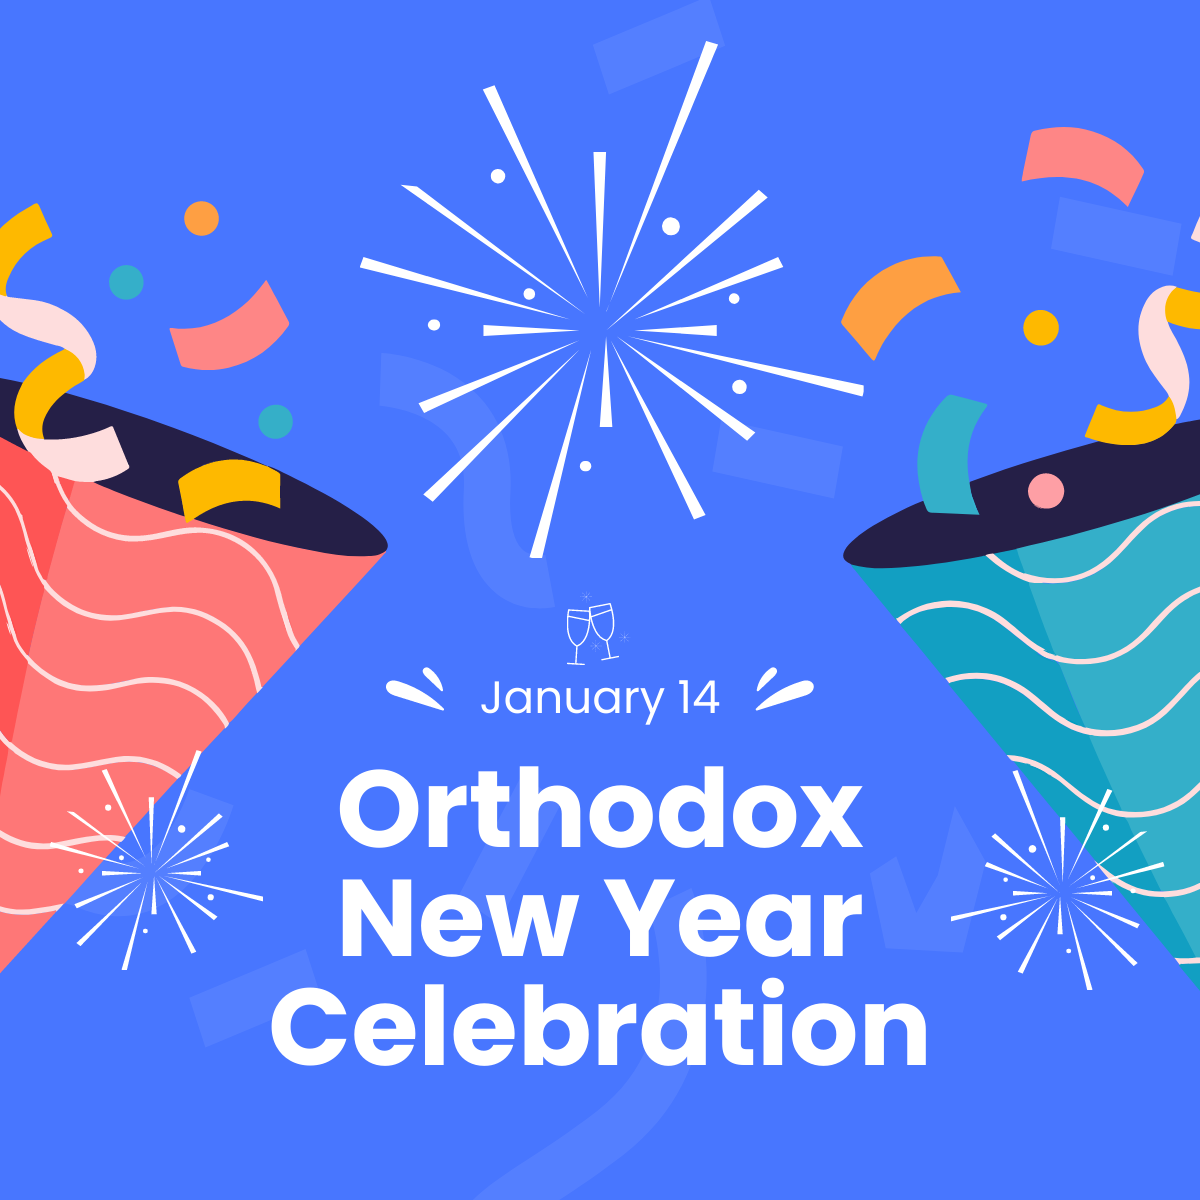 Orthodox New Year Celebration Linkedin Post